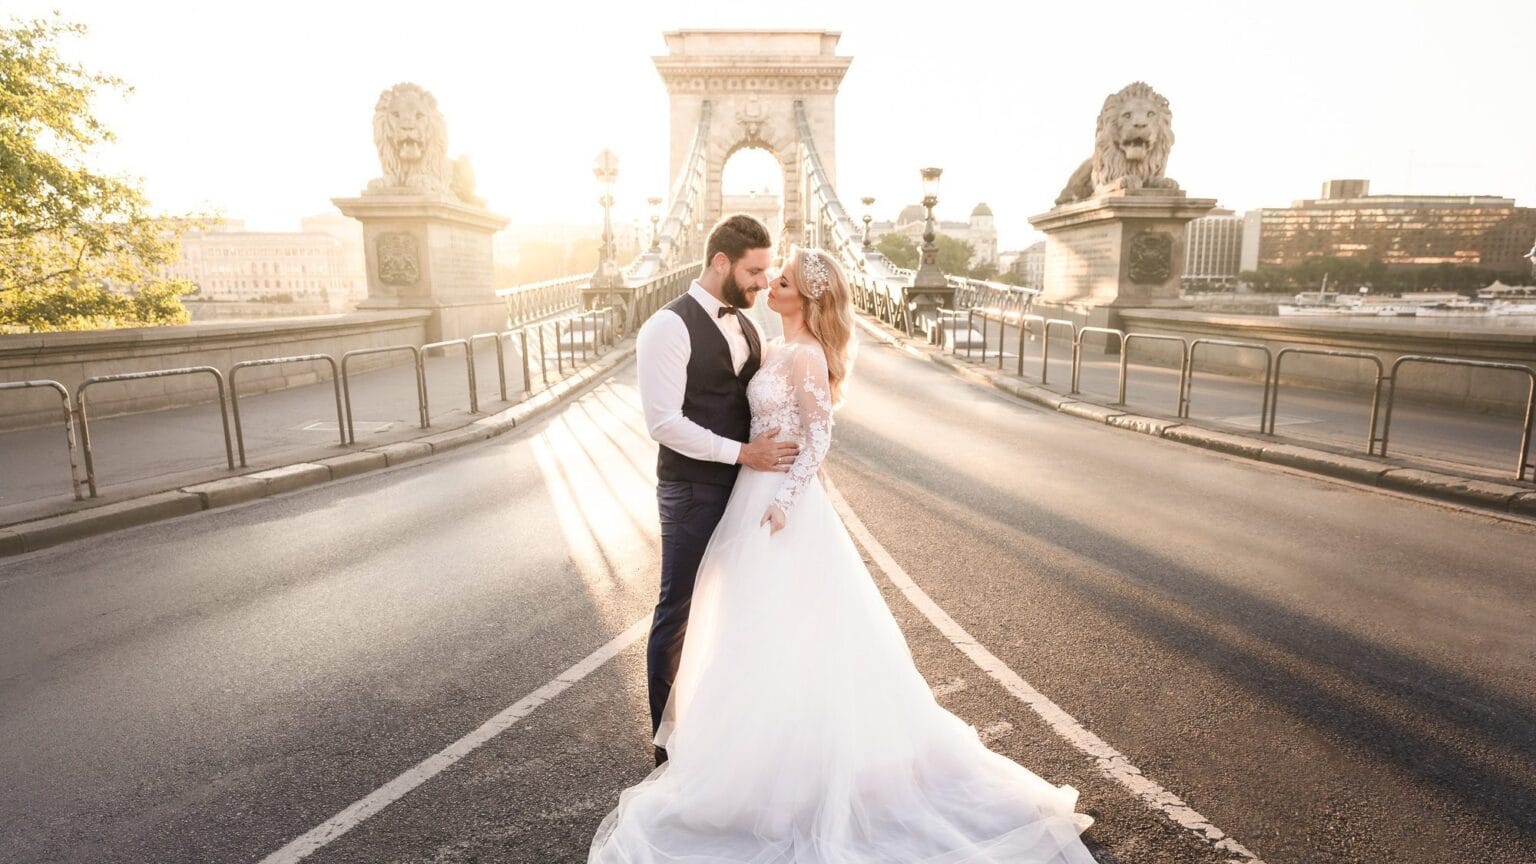 Budapest Wedding Photographer Chain Bridge Pre Wedding Pictures 001 1536x864